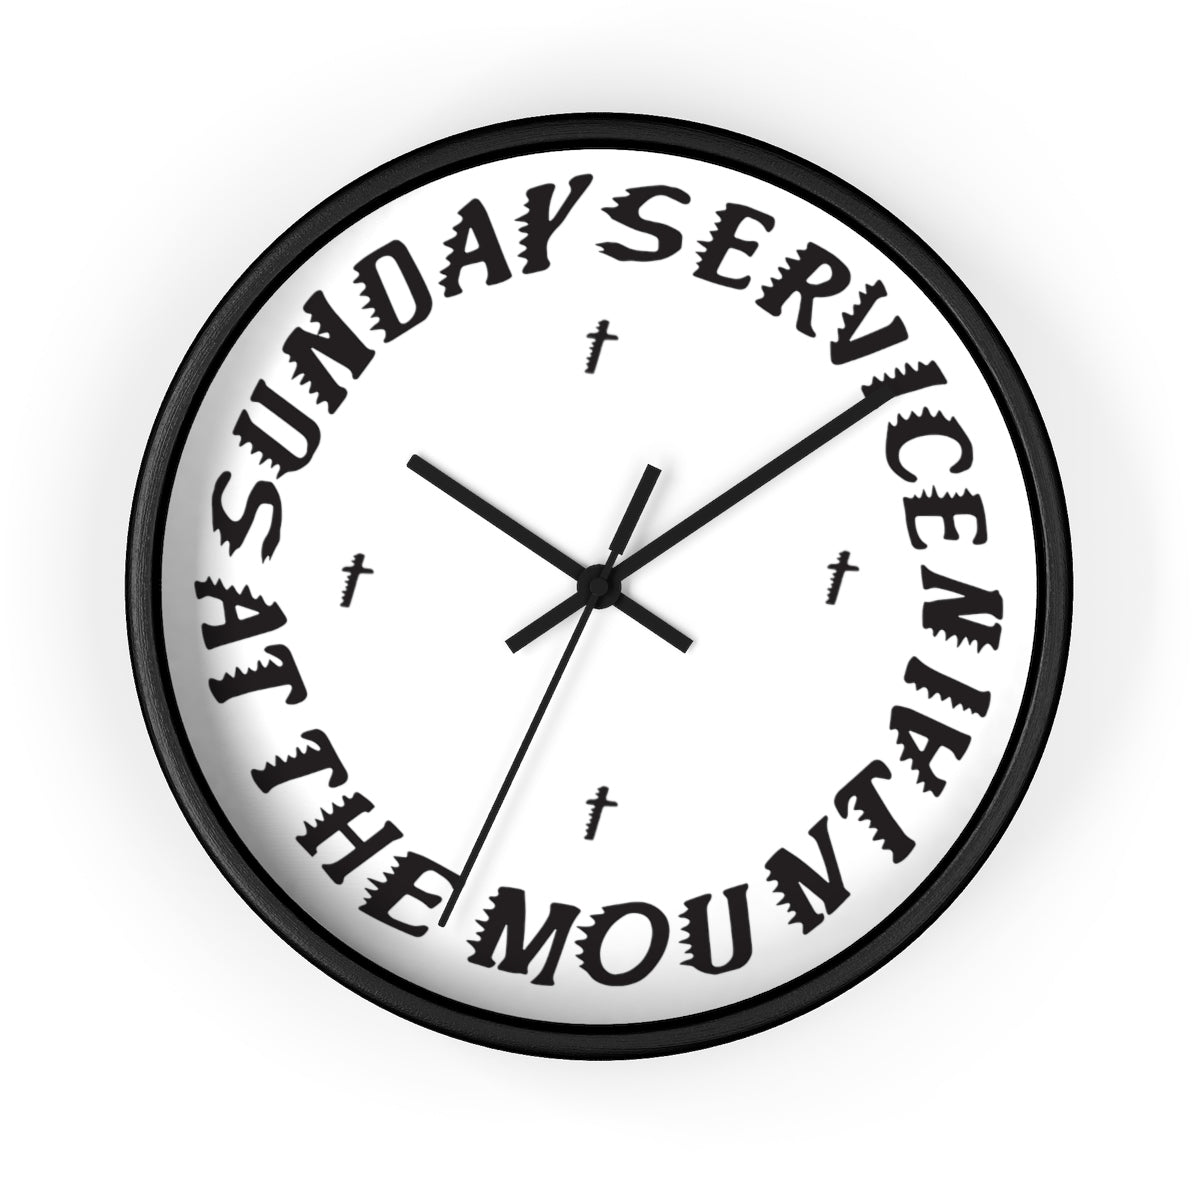 Sunday Service At The Mountain Wall clock - Kanye West Sunday Service Coachella-10 in-Black-Black-Archethype